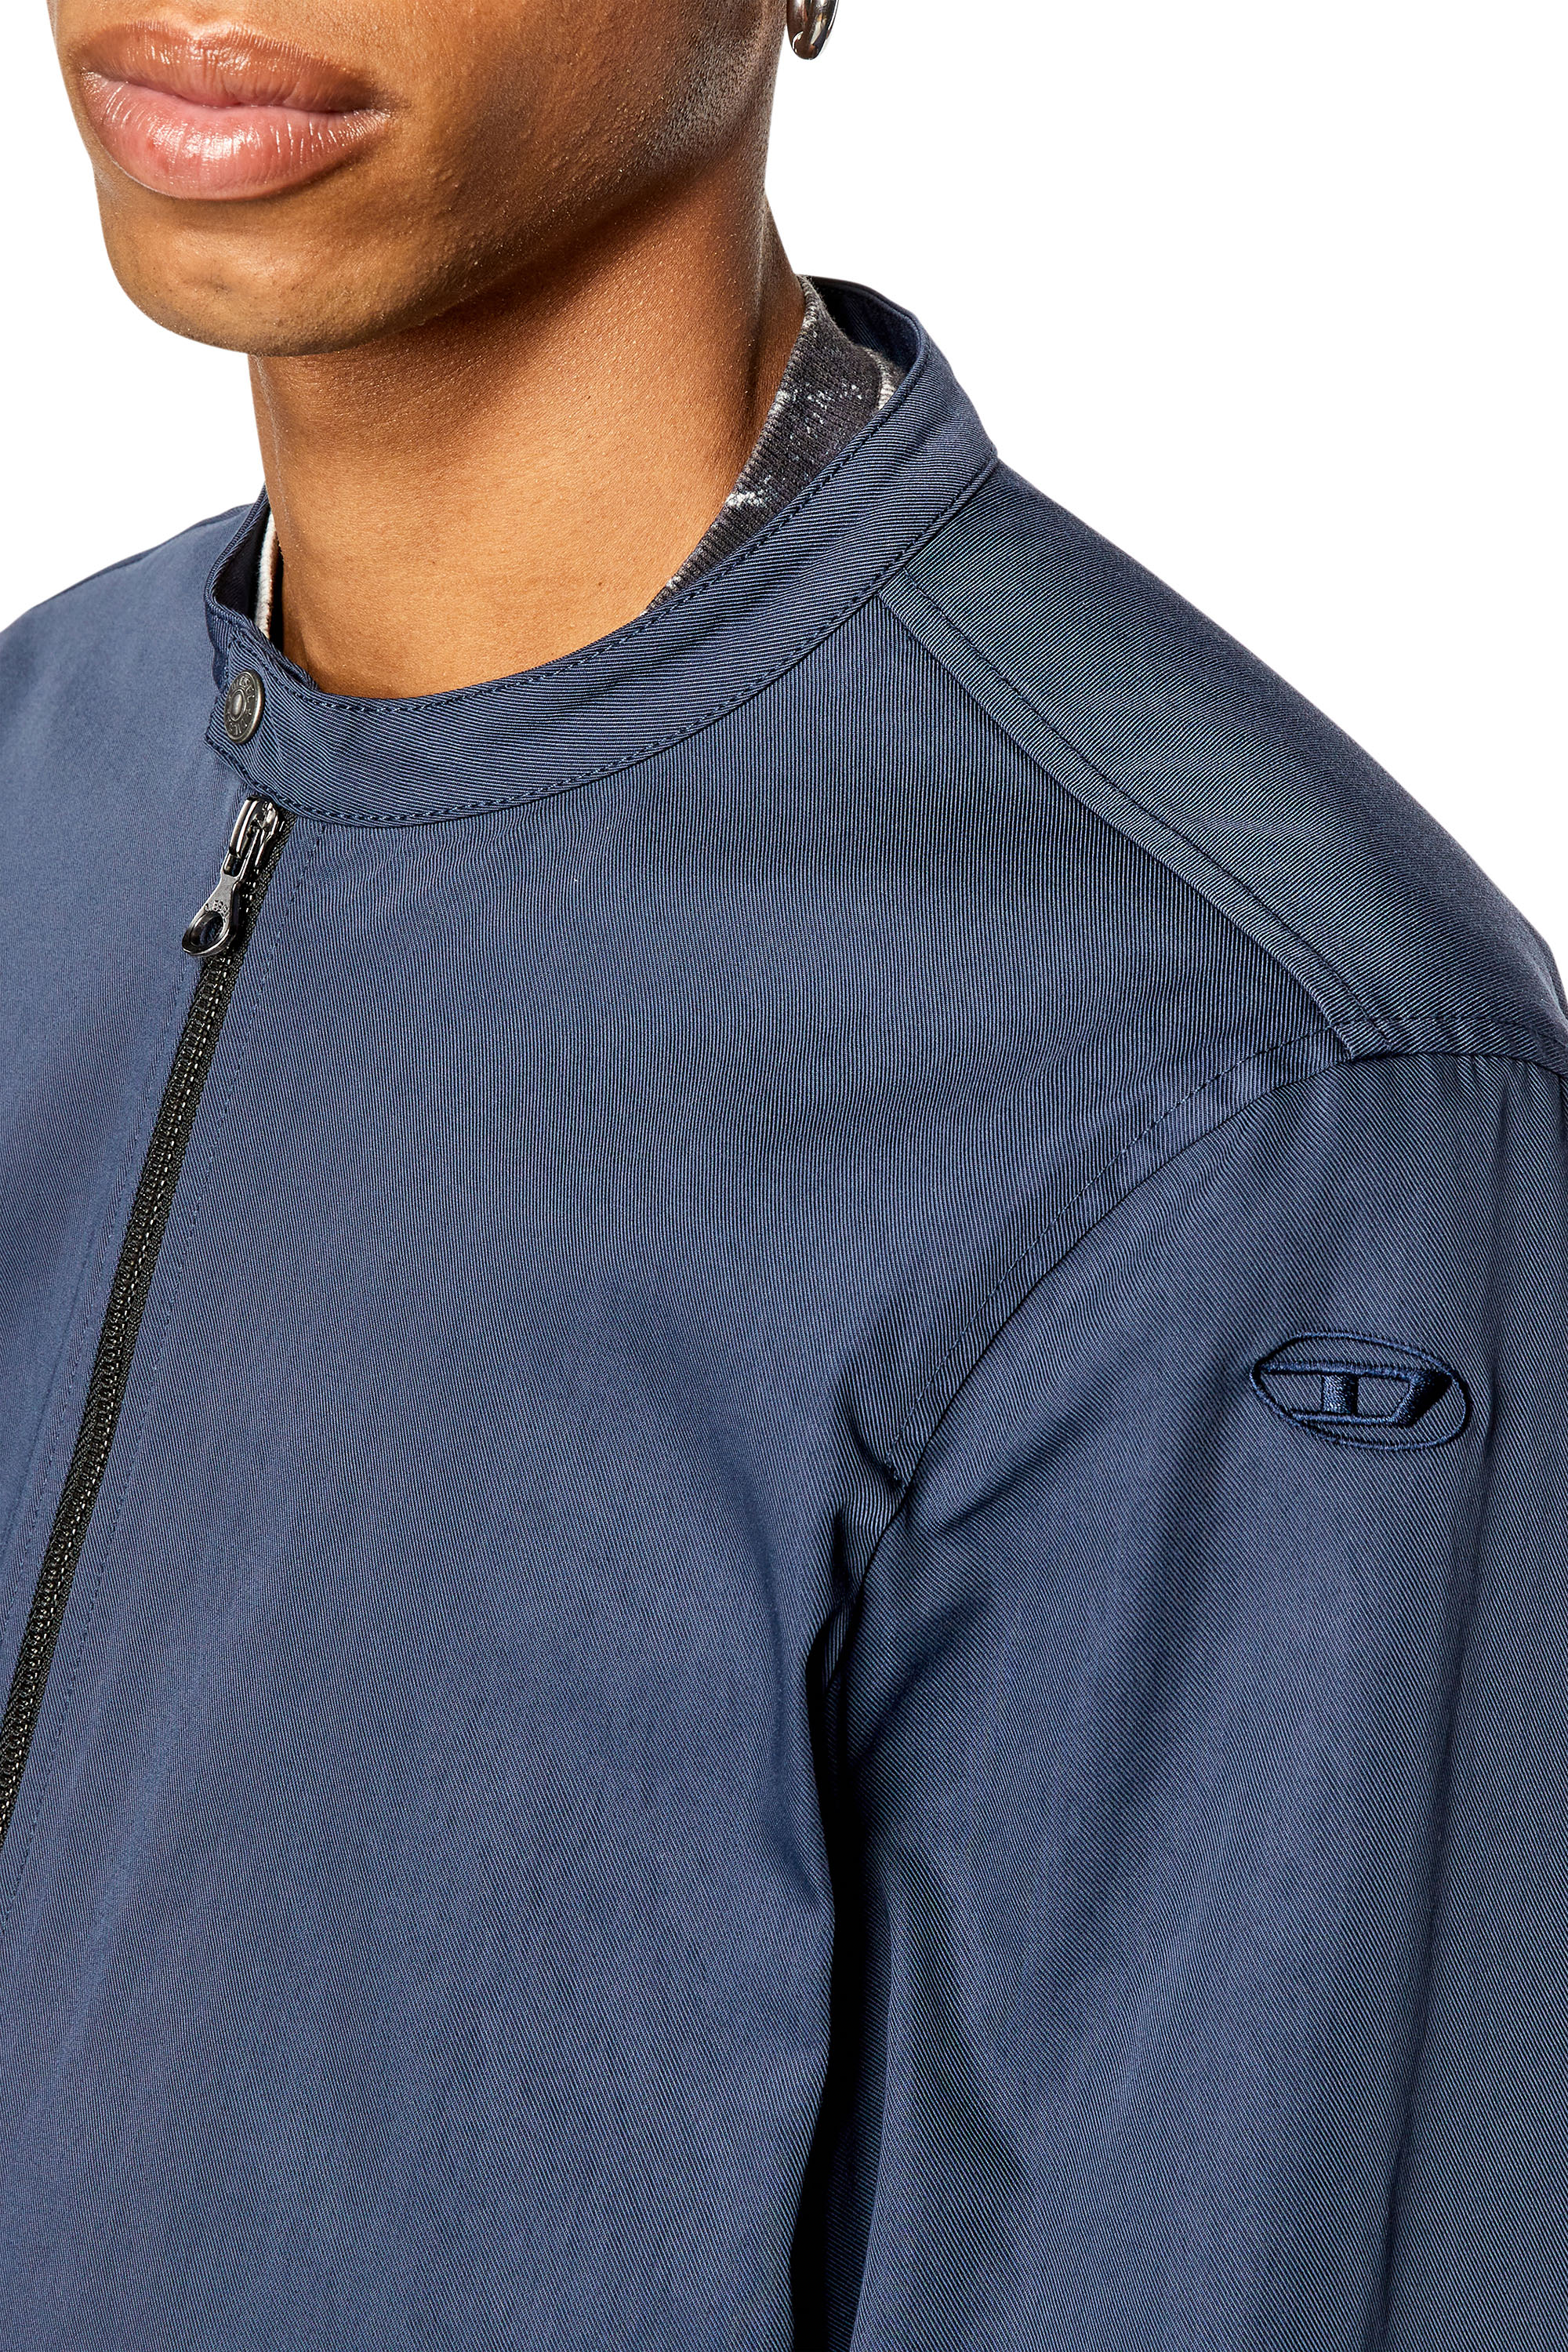 Diesel - J-GLORY-NW, Male Biker jacket in cotton-touch nylon in Blue - Image 4